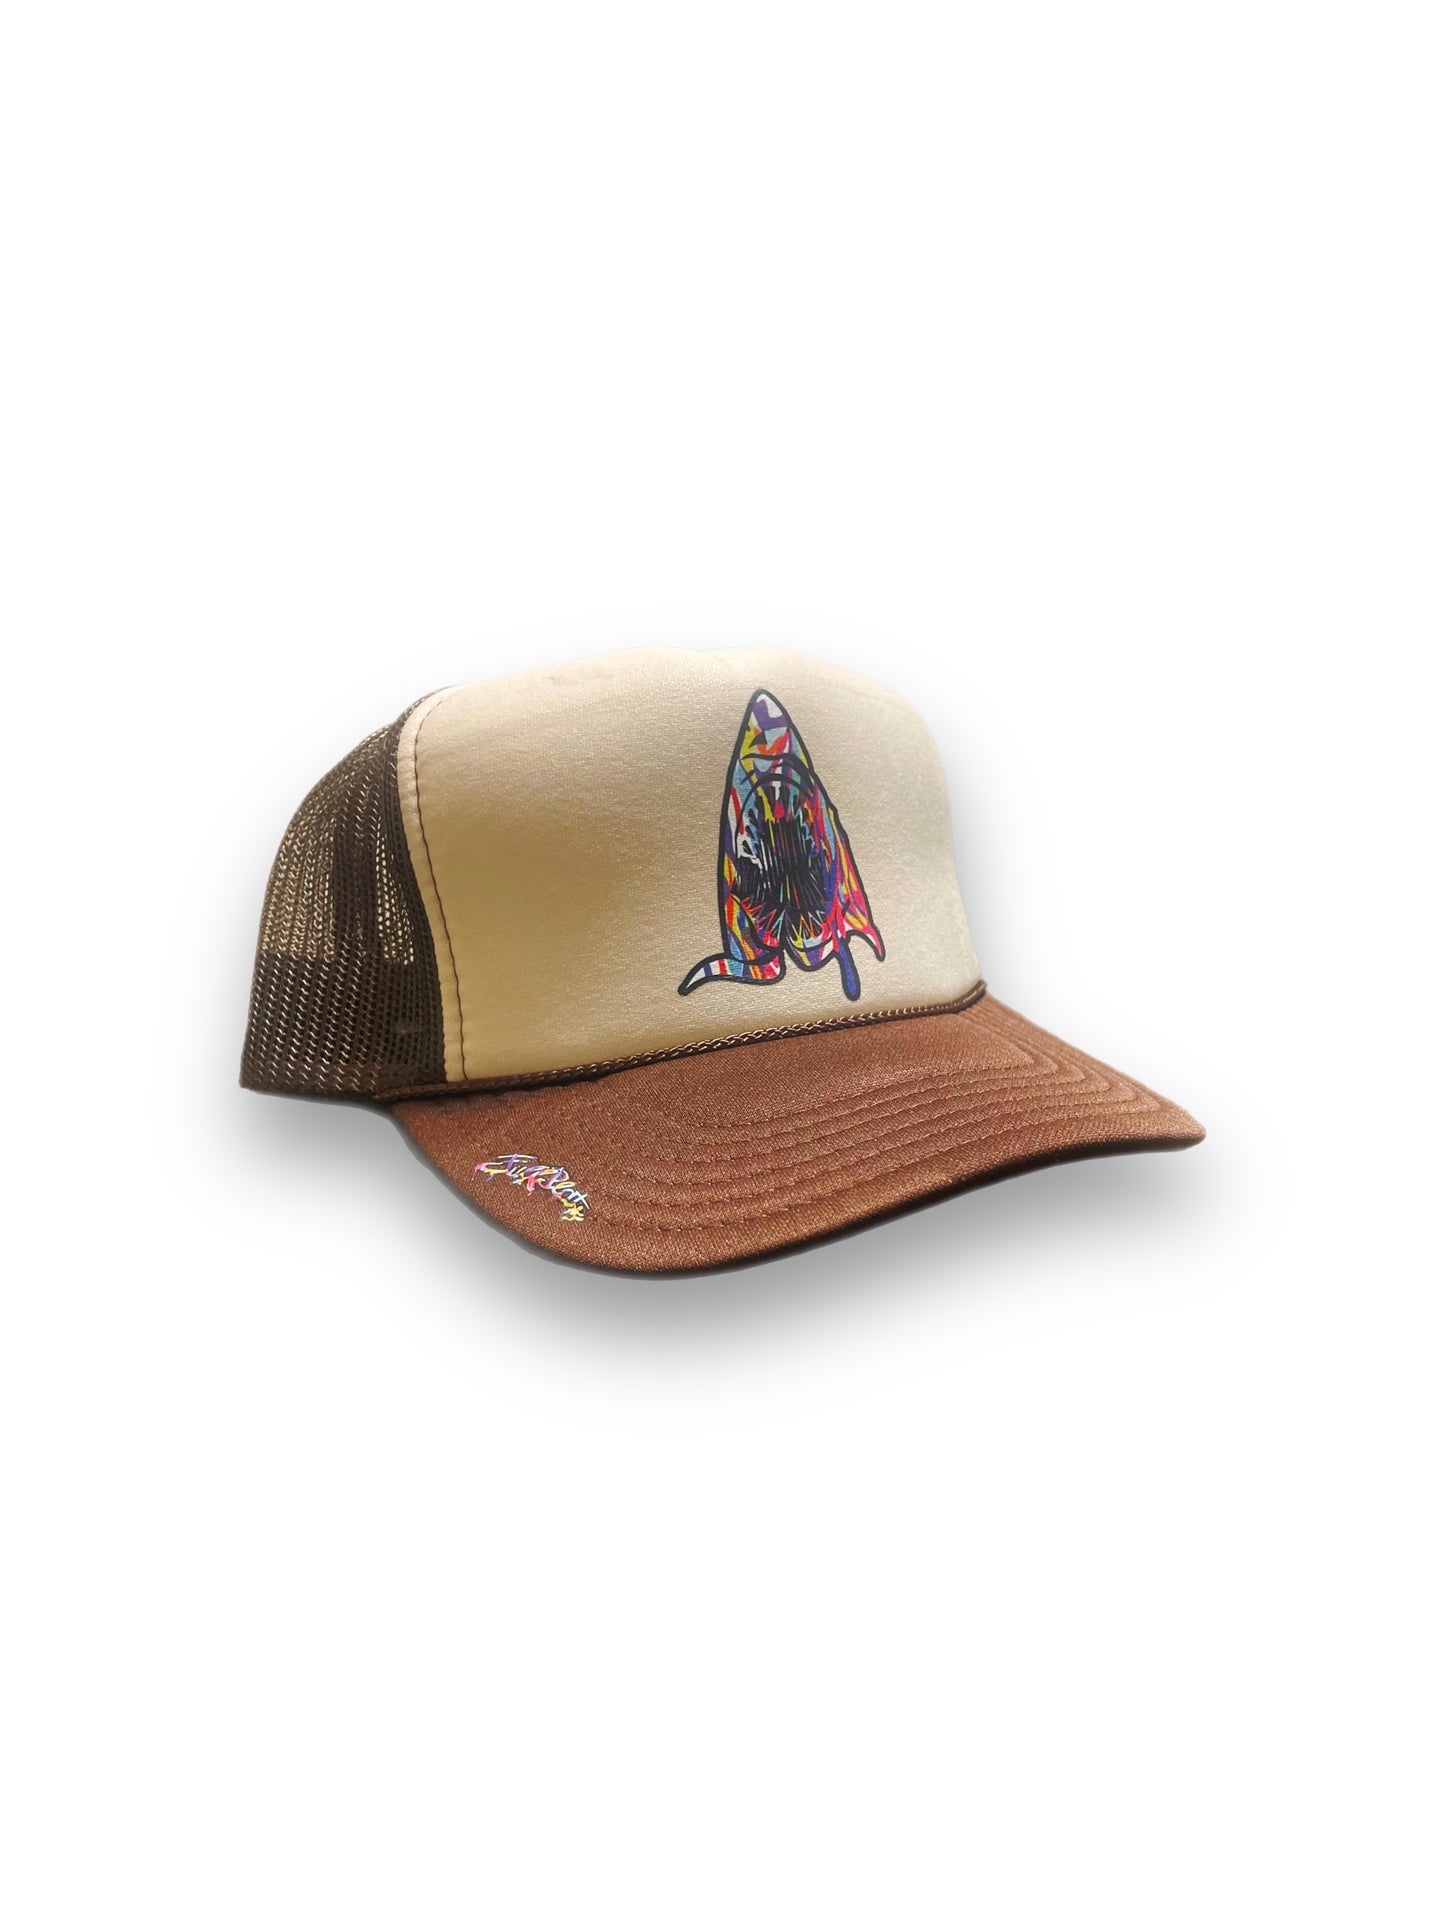 Fullplate co Color Shark Trucker hats assorted colors